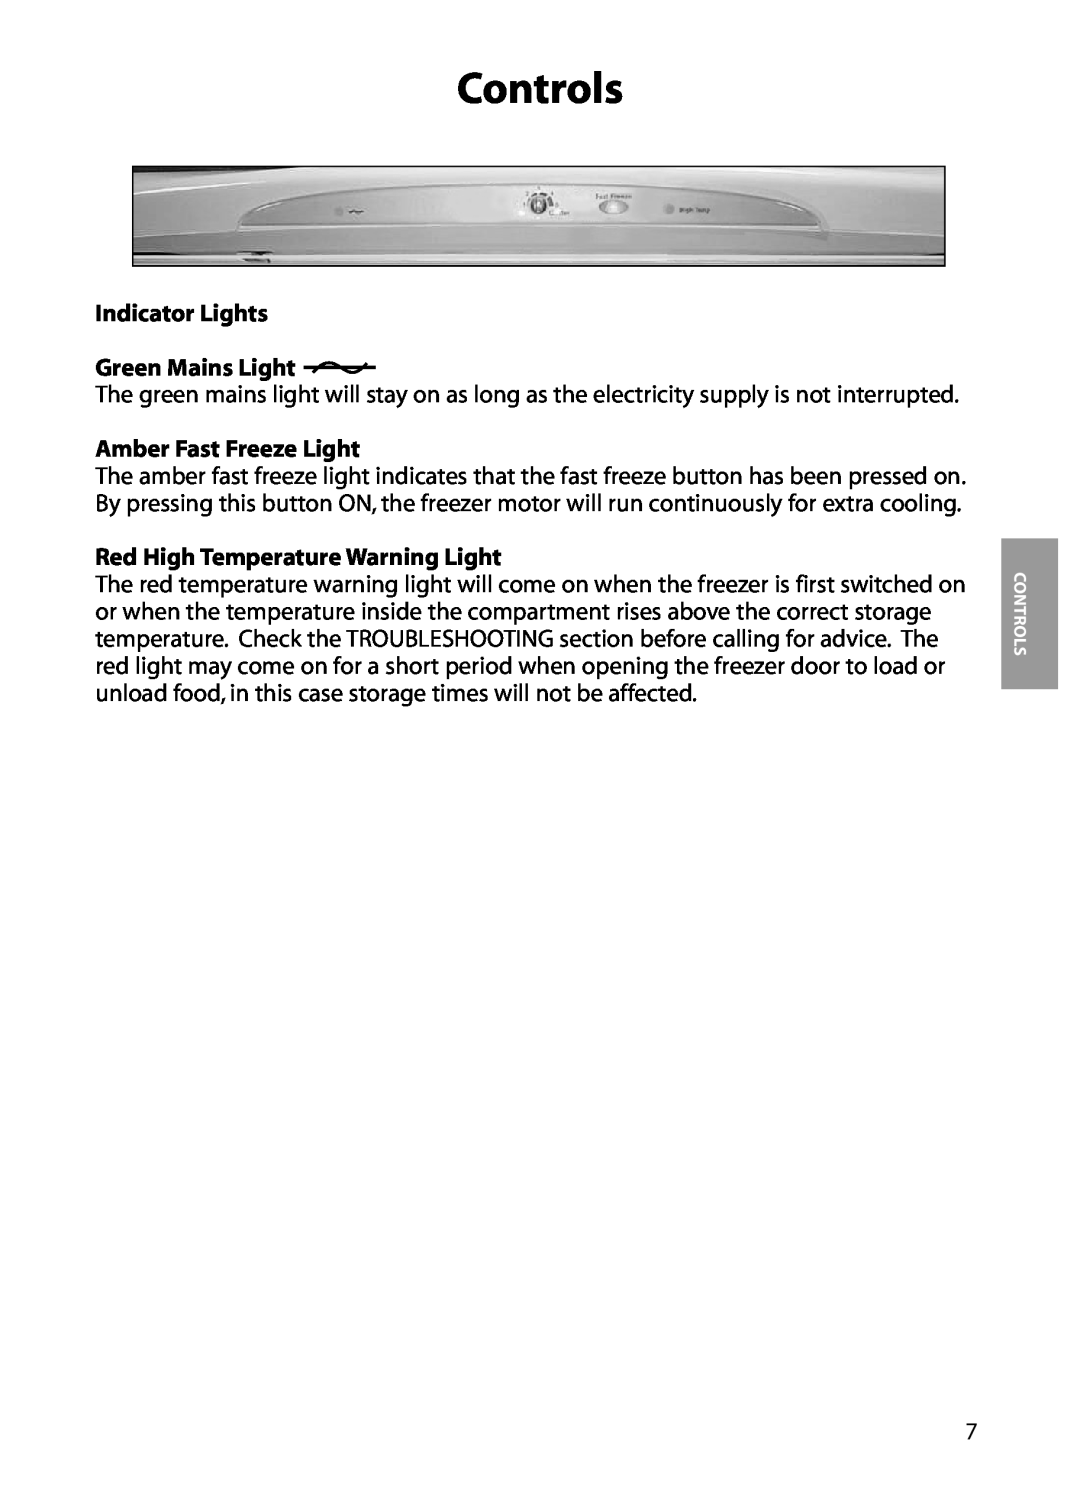 Hotpoint FZA34 Indicator Lights Green Mains Light, Amber Fast Freeze Light, Red High Temperature Warning Light, Controls 